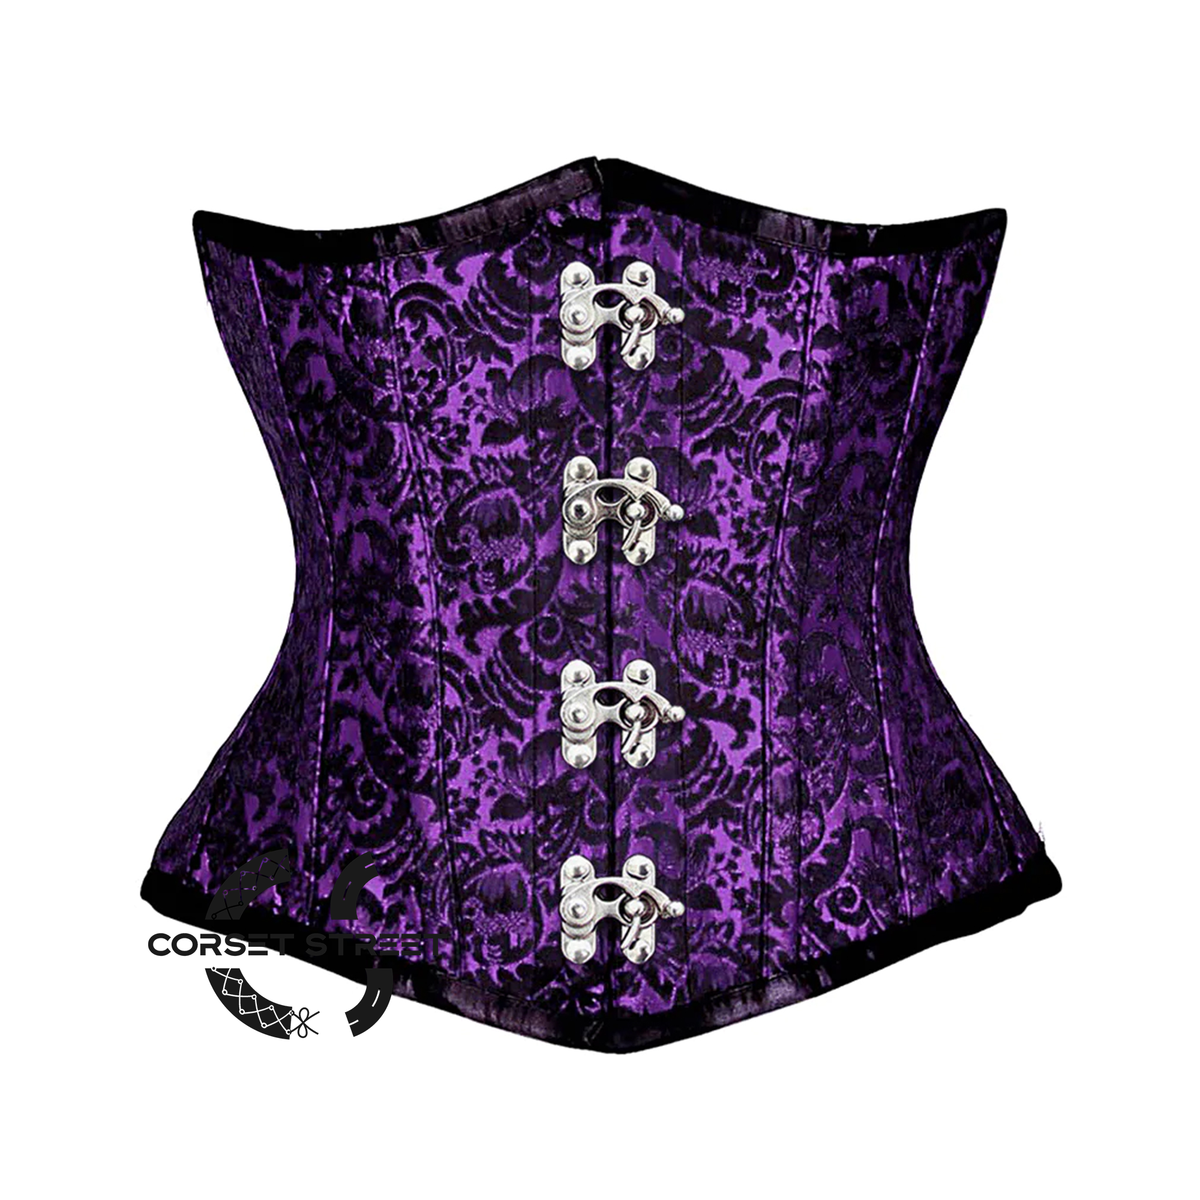 Purple And Black Brocade Front Clasps Steampunk Gothic Waist Training Underbust Corset Bustier Top